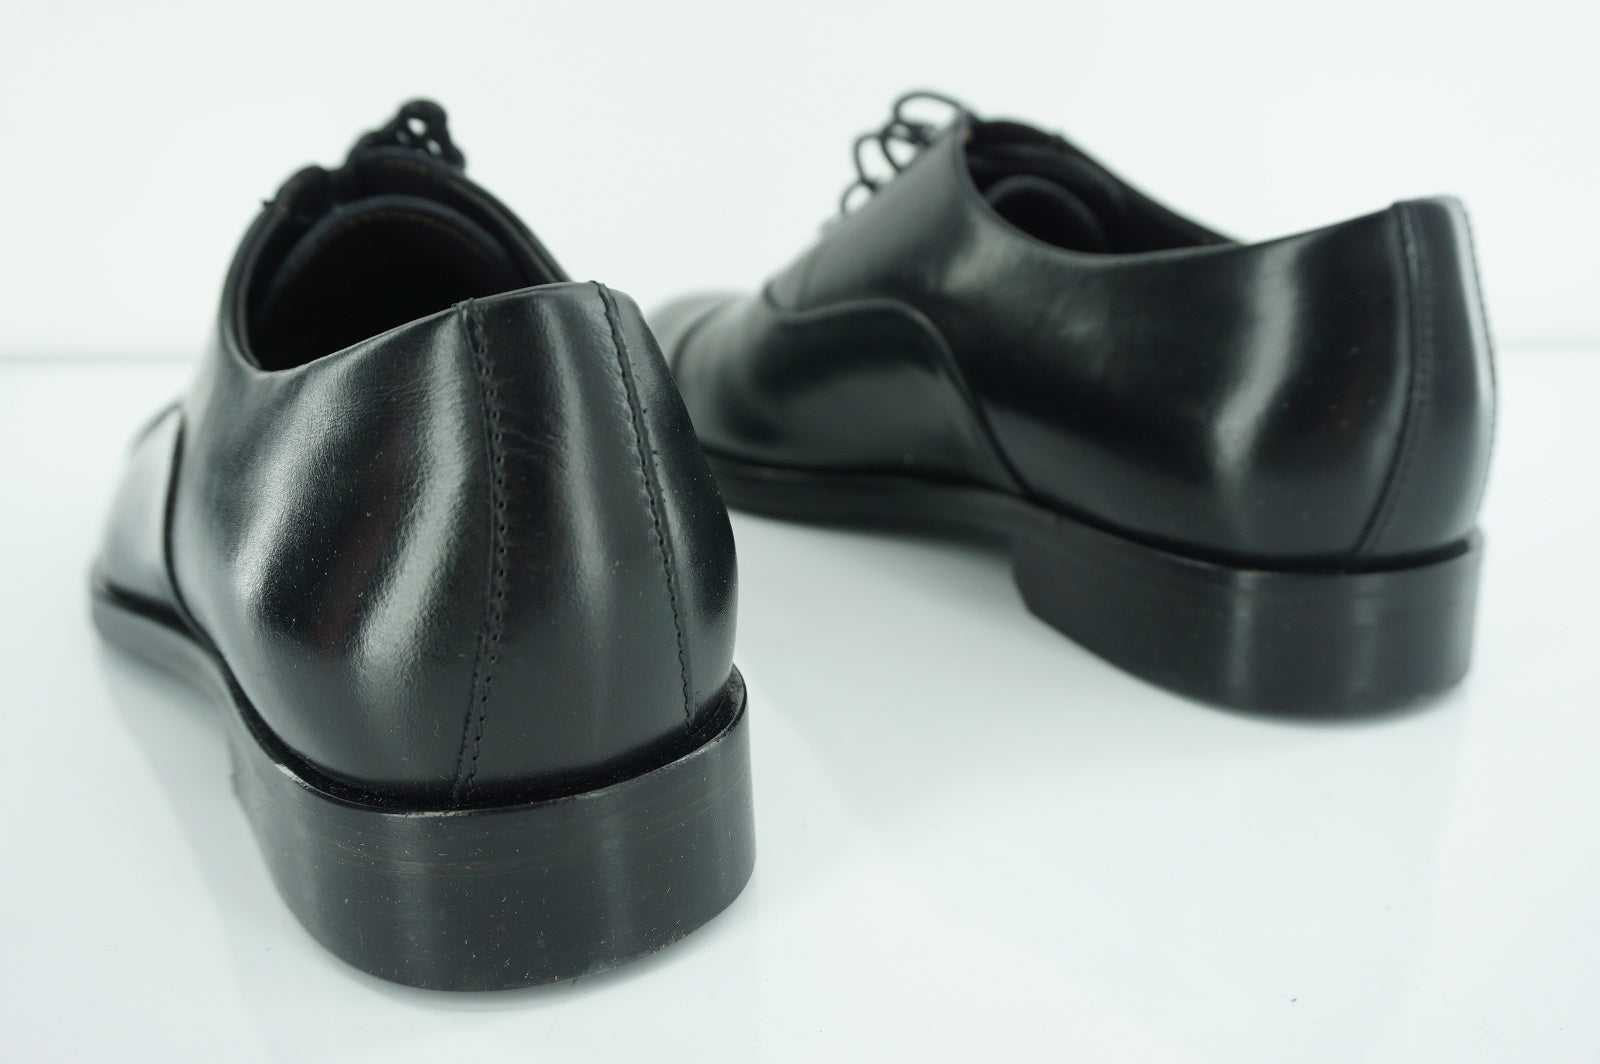 To Boot New York Bergamo Cap Toe Black Leather Shoes Size 8.5 Men's Adan Derrick